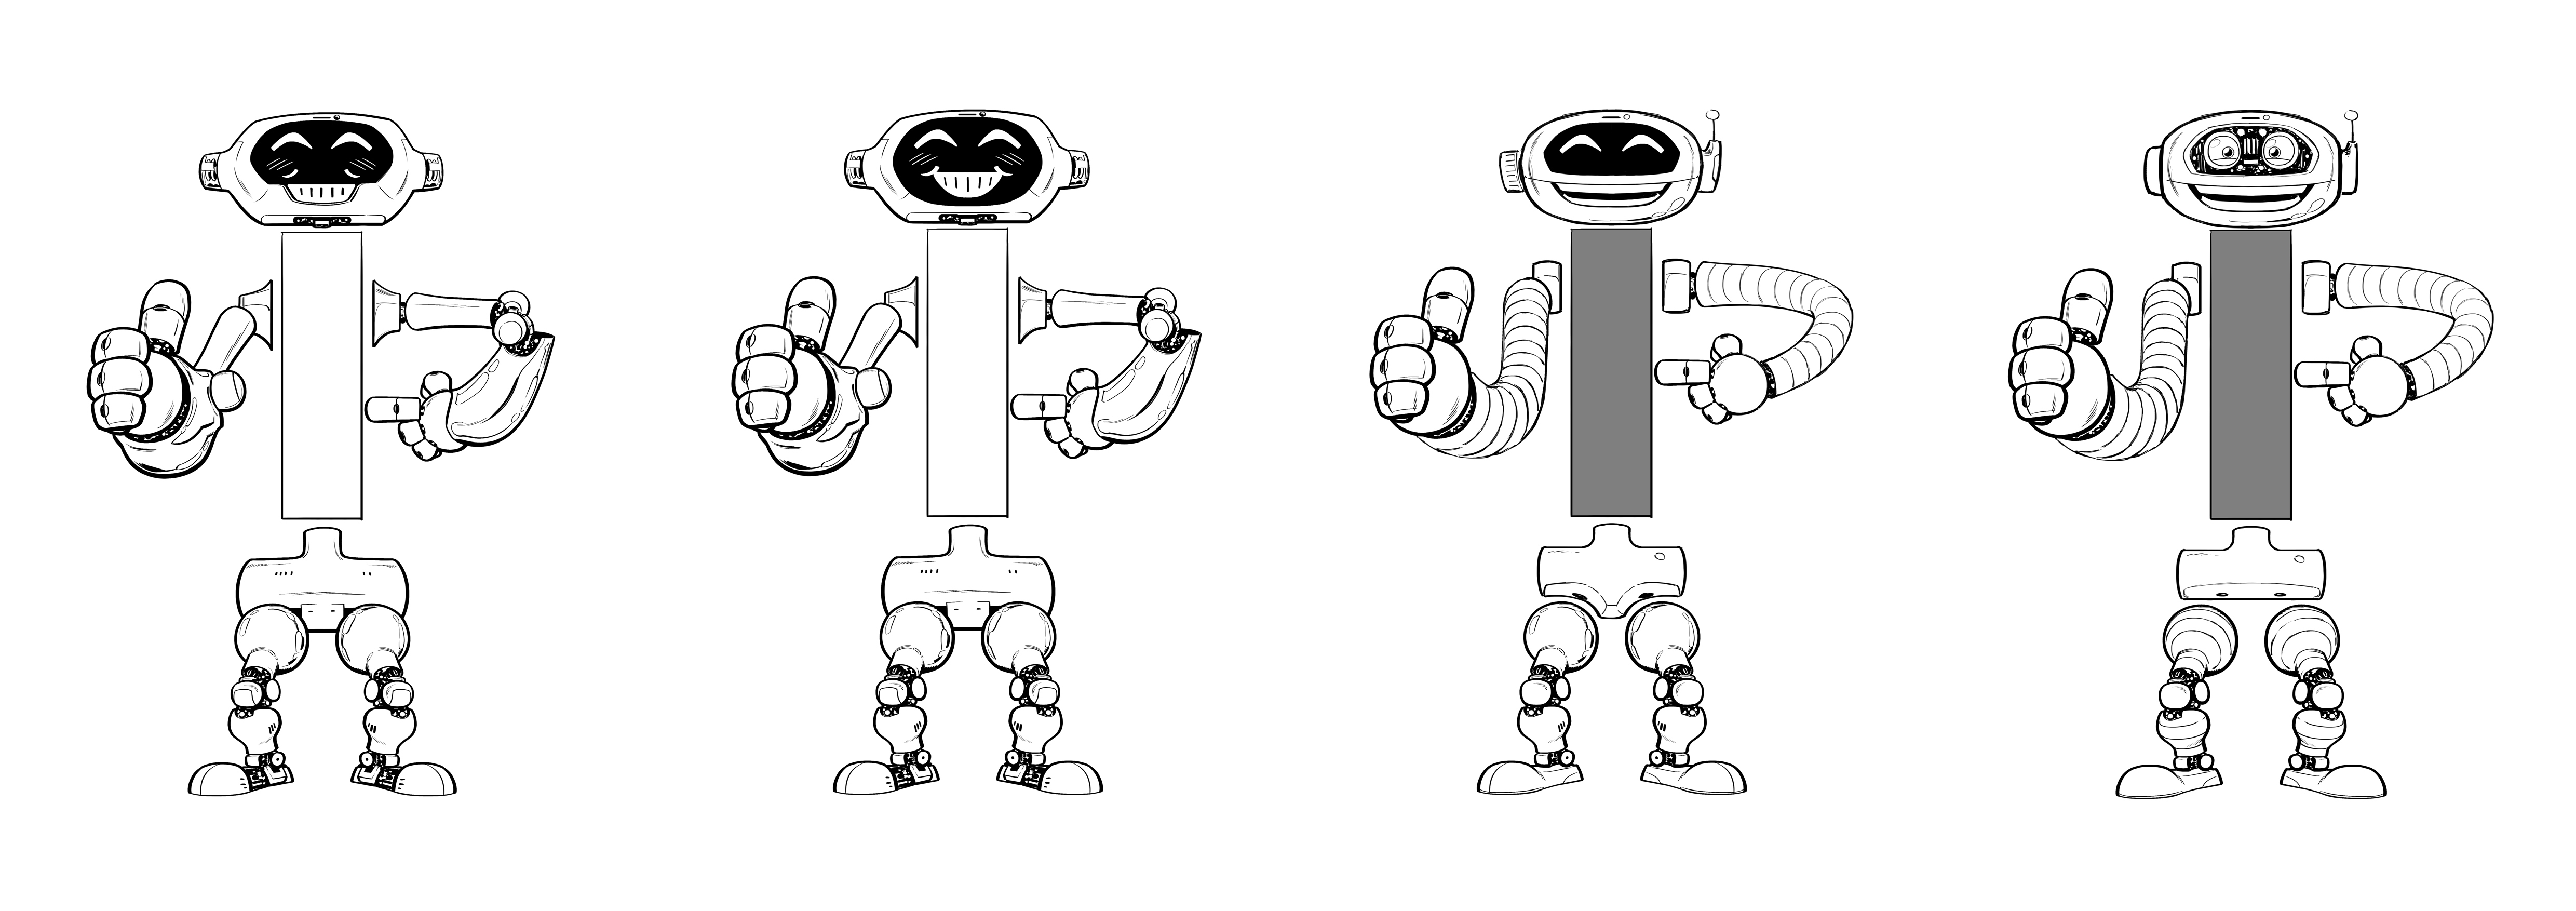 Transperth Robot concept